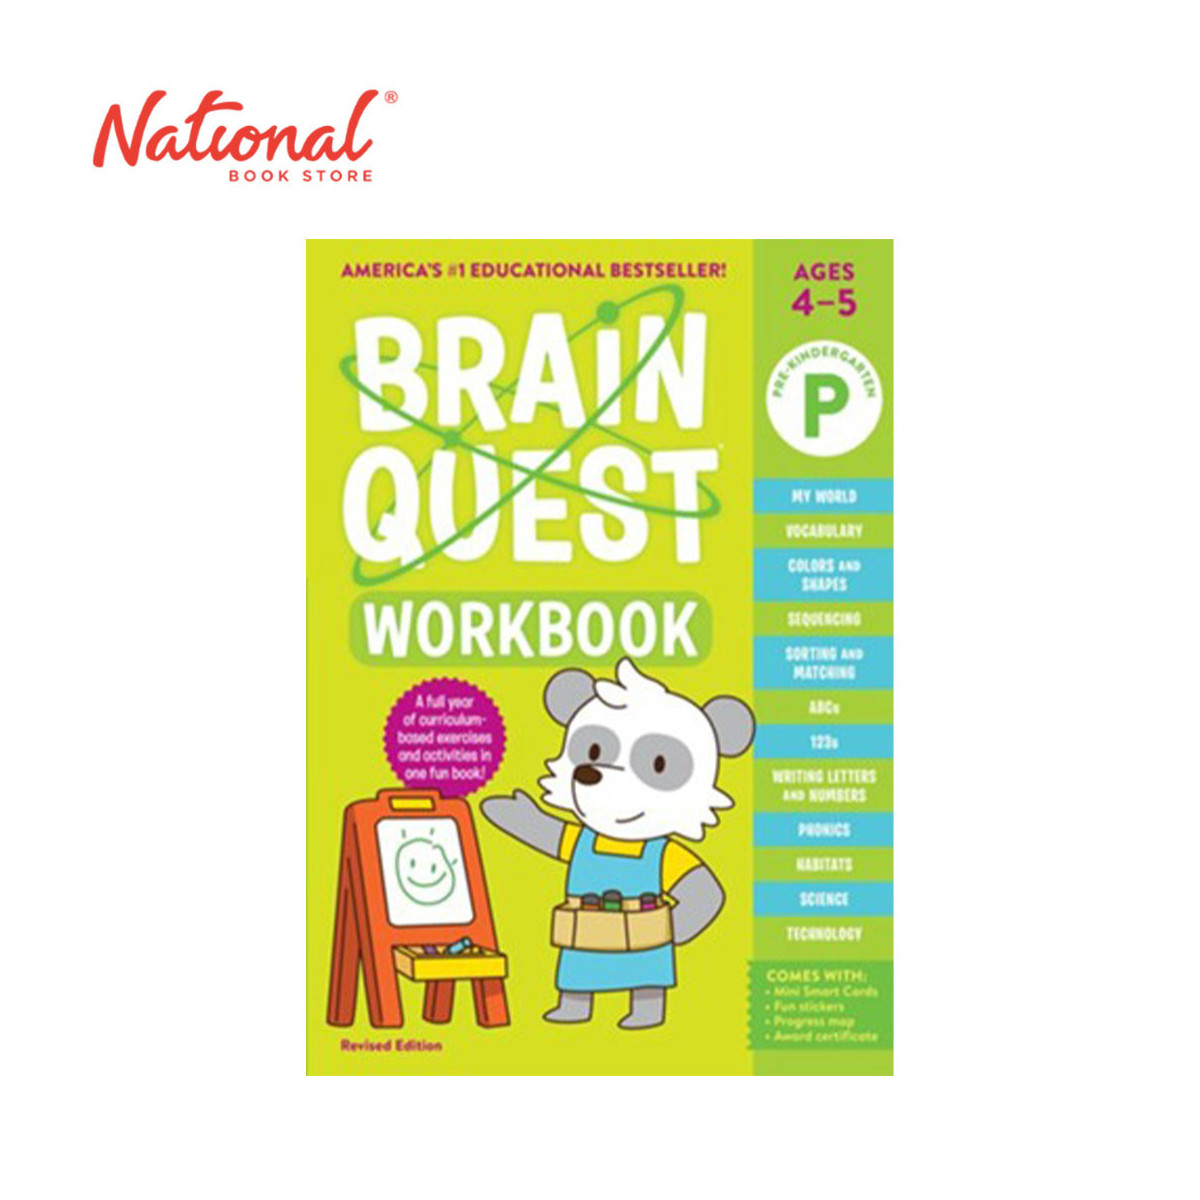 Brain Quest Workbook: Pre-K Rev Ed - Trade Paperback - Activity Books for Kids